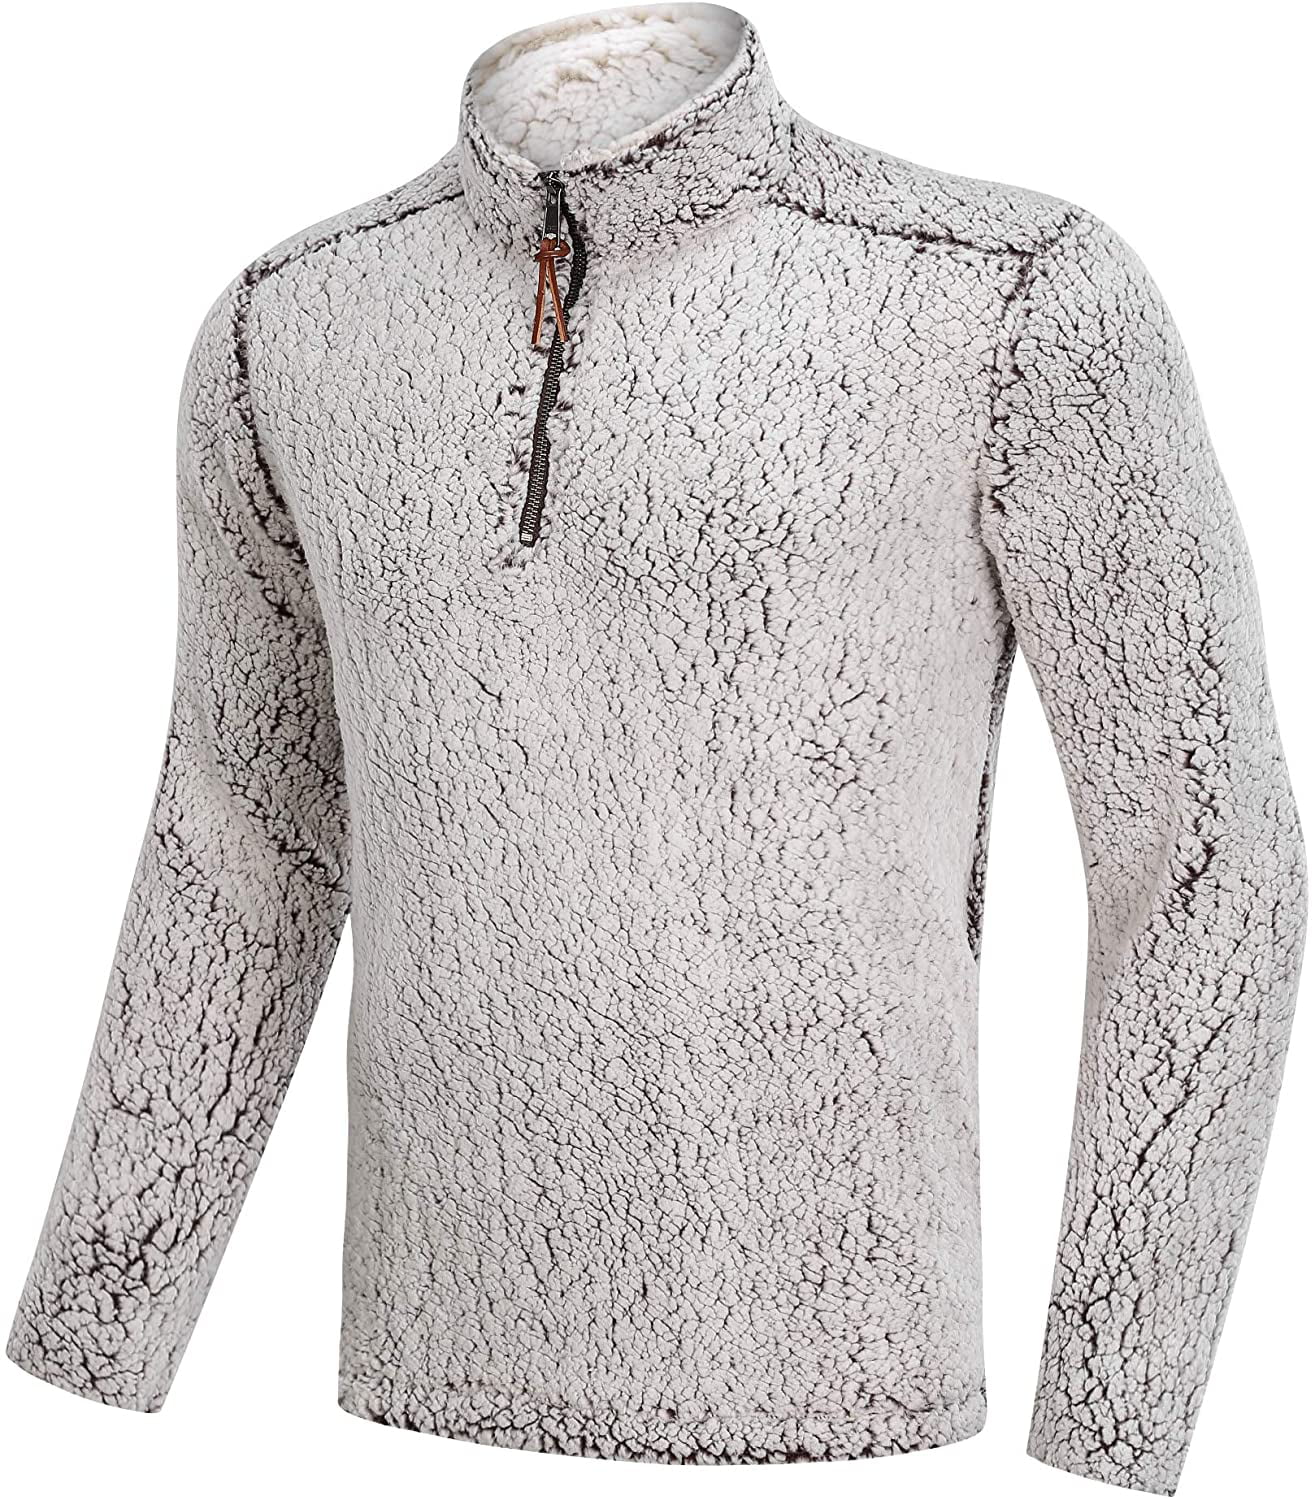 white fleece pullover